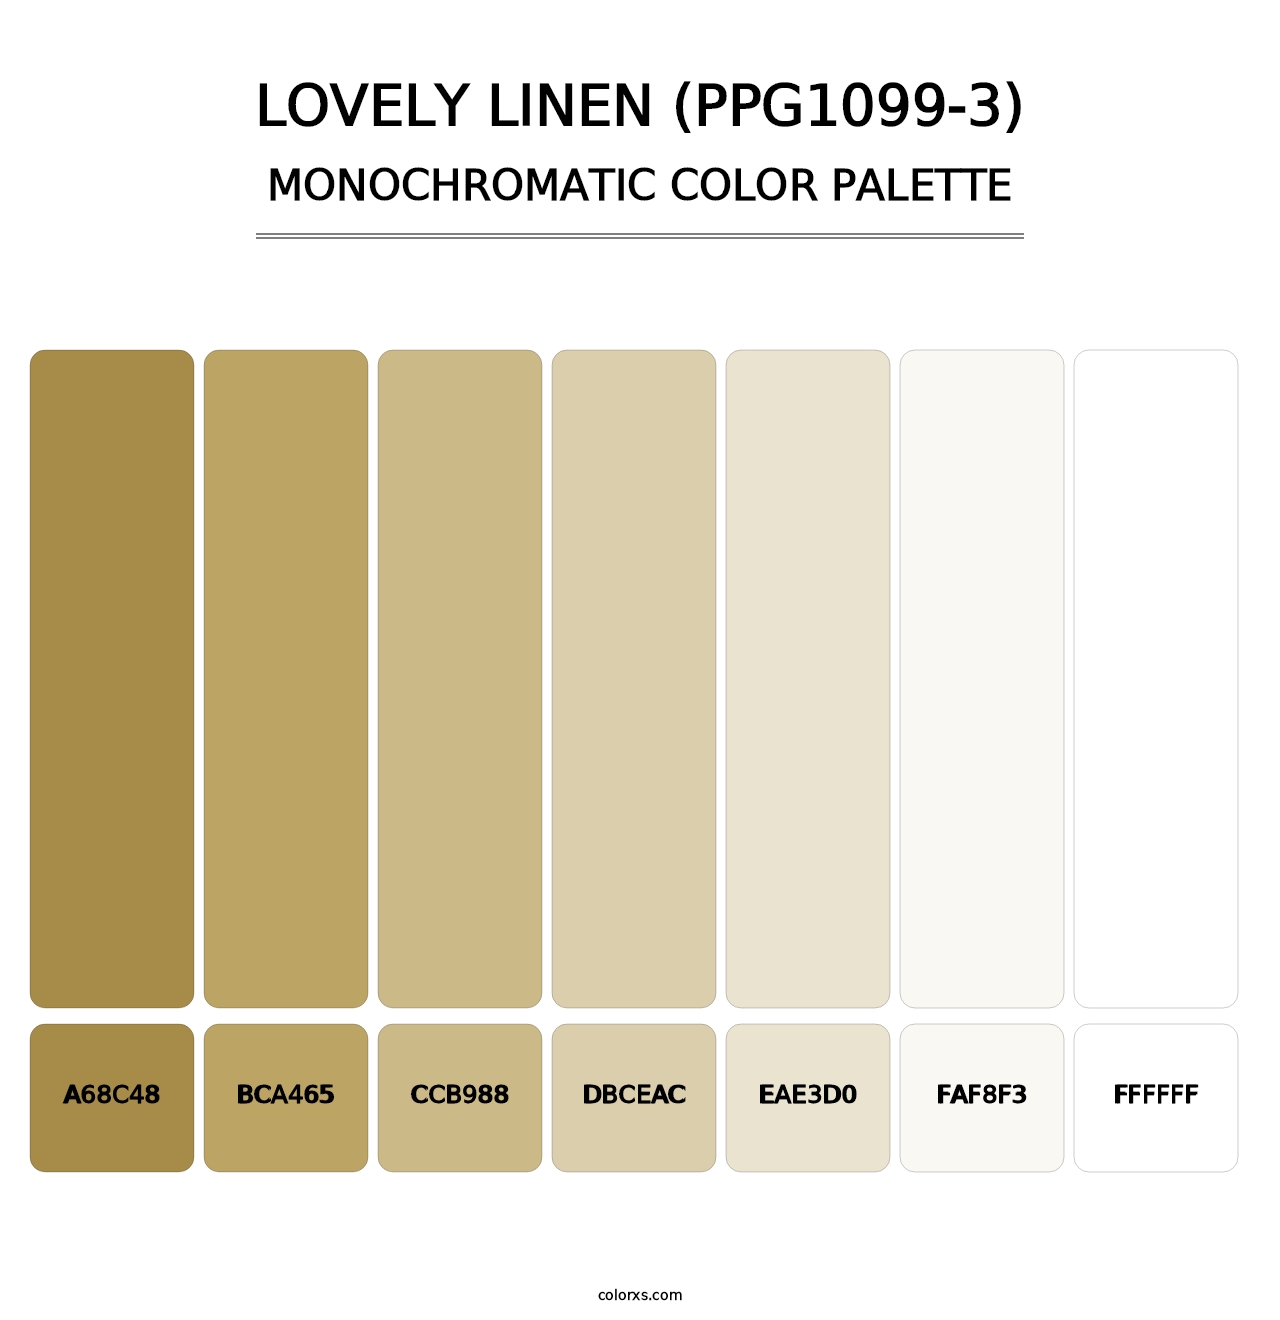 Lovely Linen (PPG1099-3) - Monochromatic Color Palette